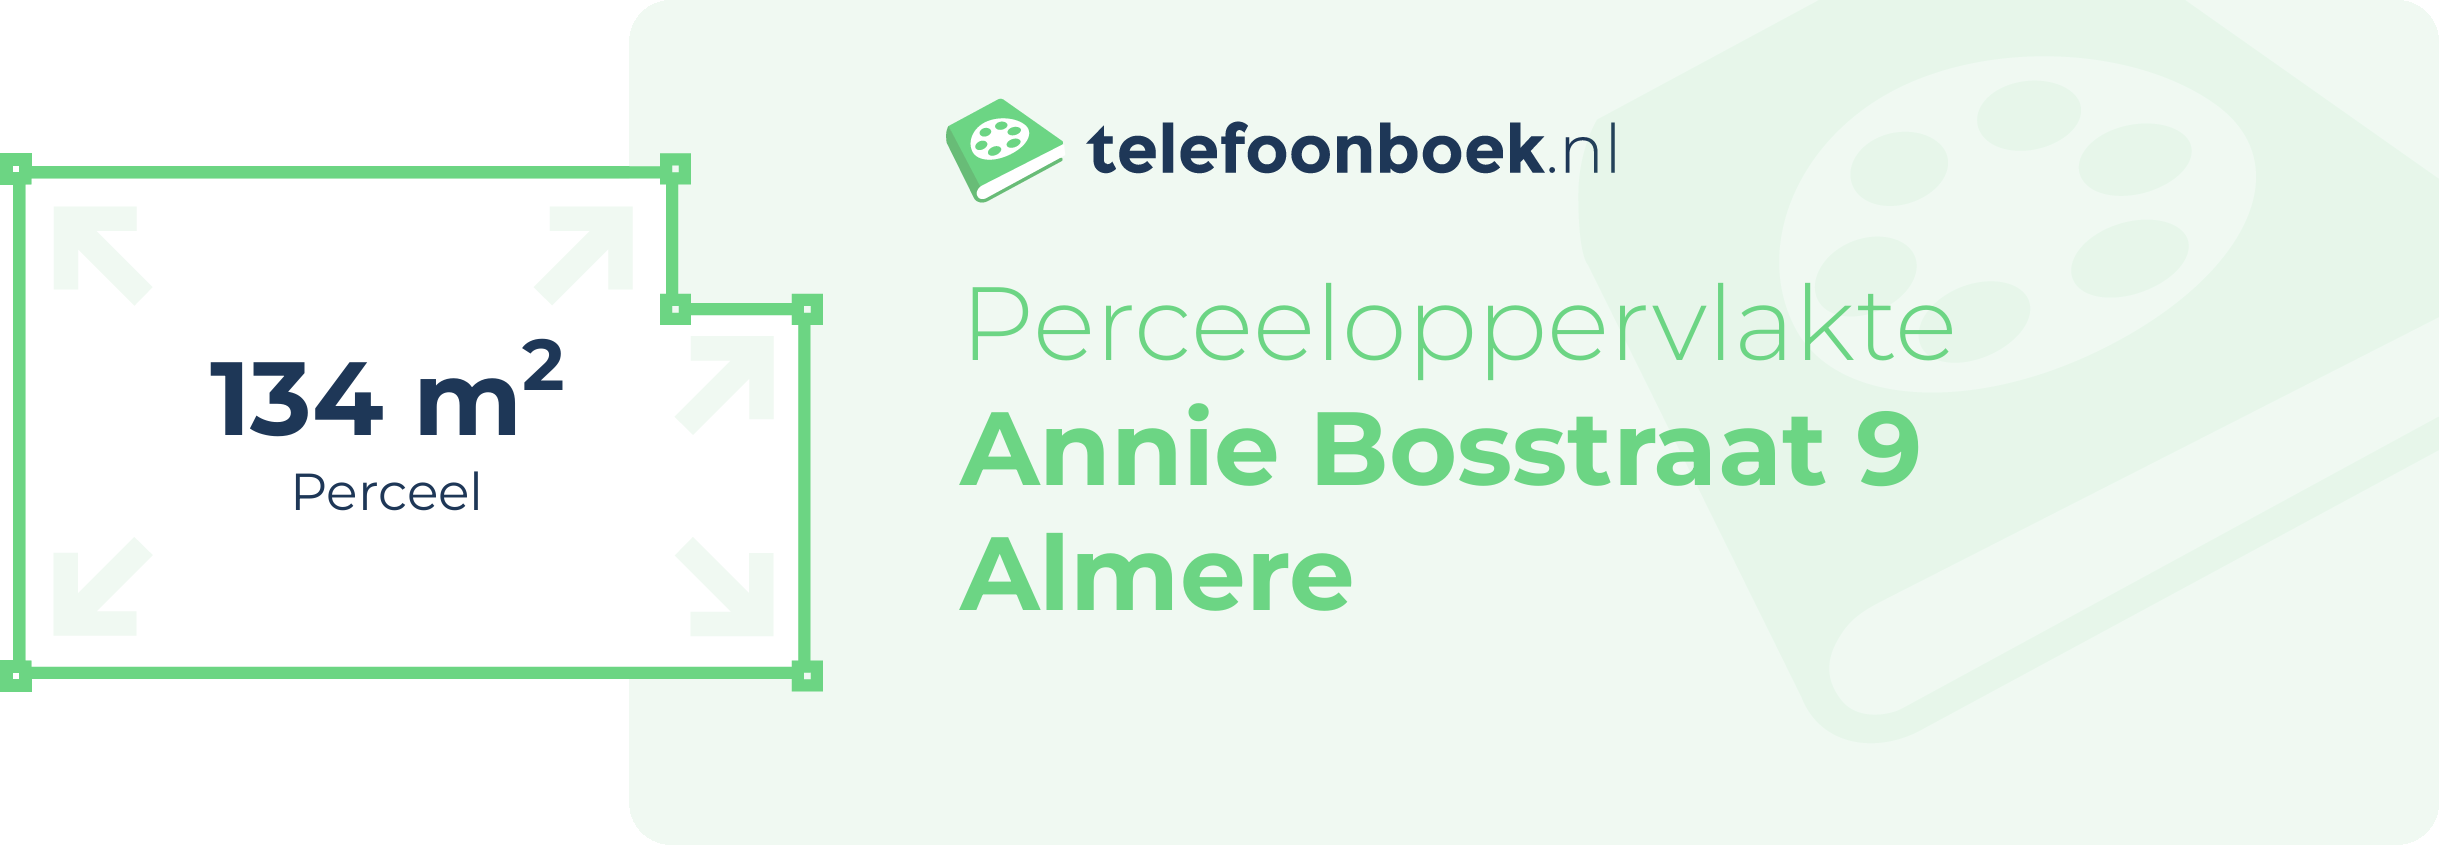 Perceeloppervlakte Annie Bosstraat 9 Almere